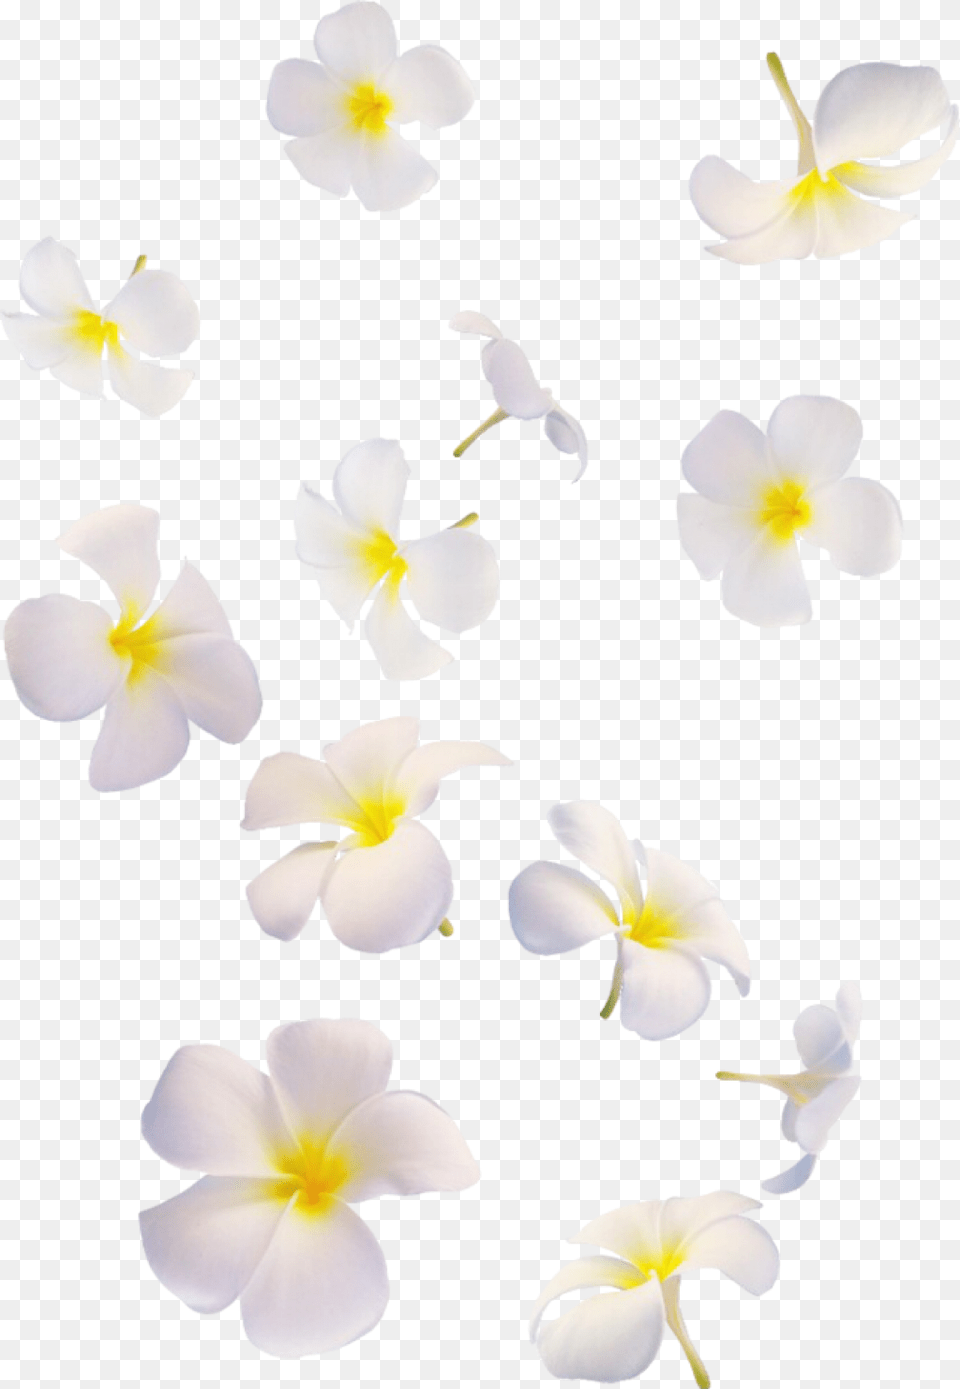 Transparent Flower Overlay White Flowers Falling, Petal, Plant, Animal, Bird Png